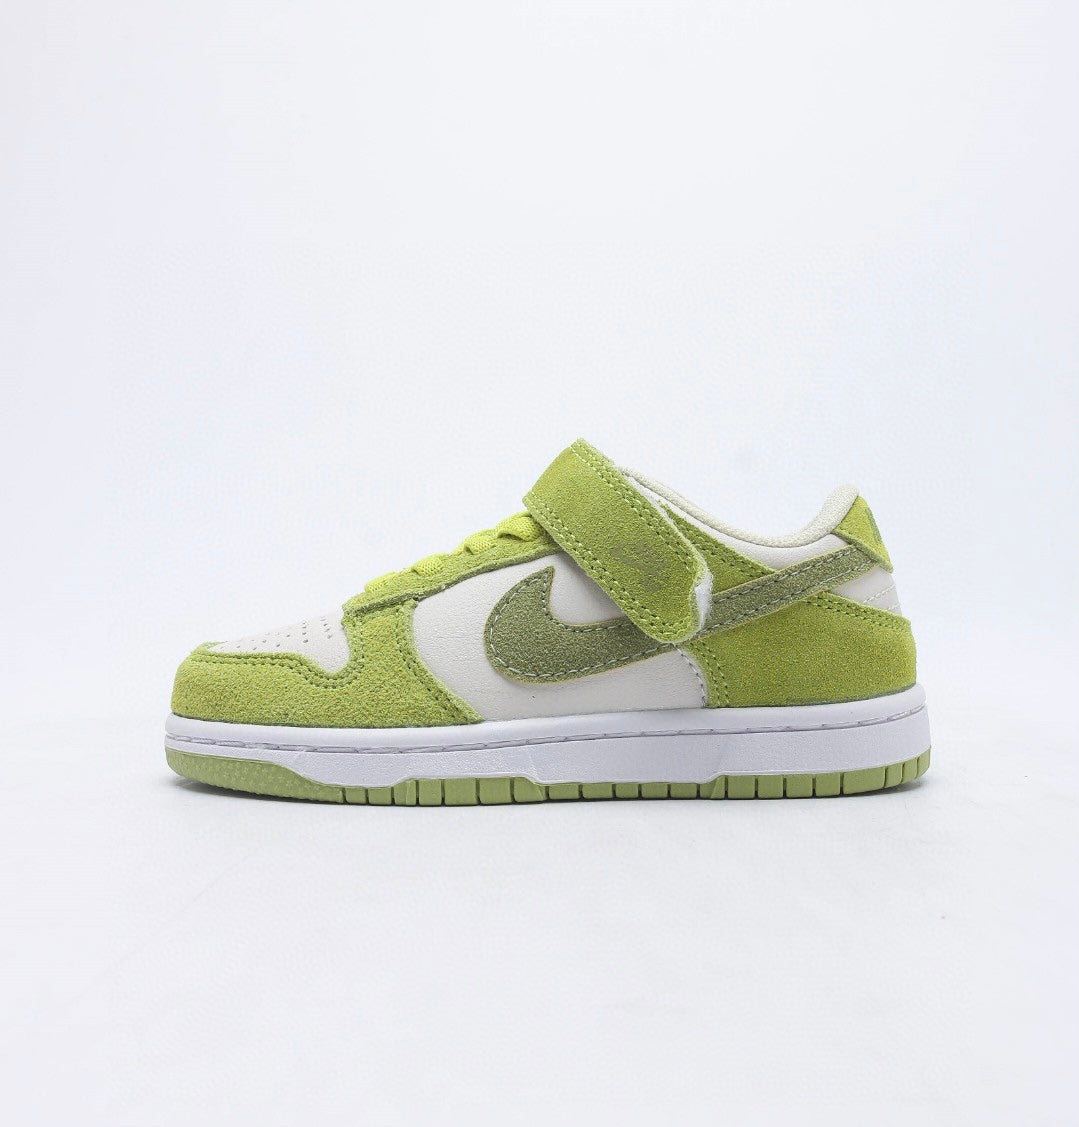 Nike SB zoom dunk haute chaussures vertes